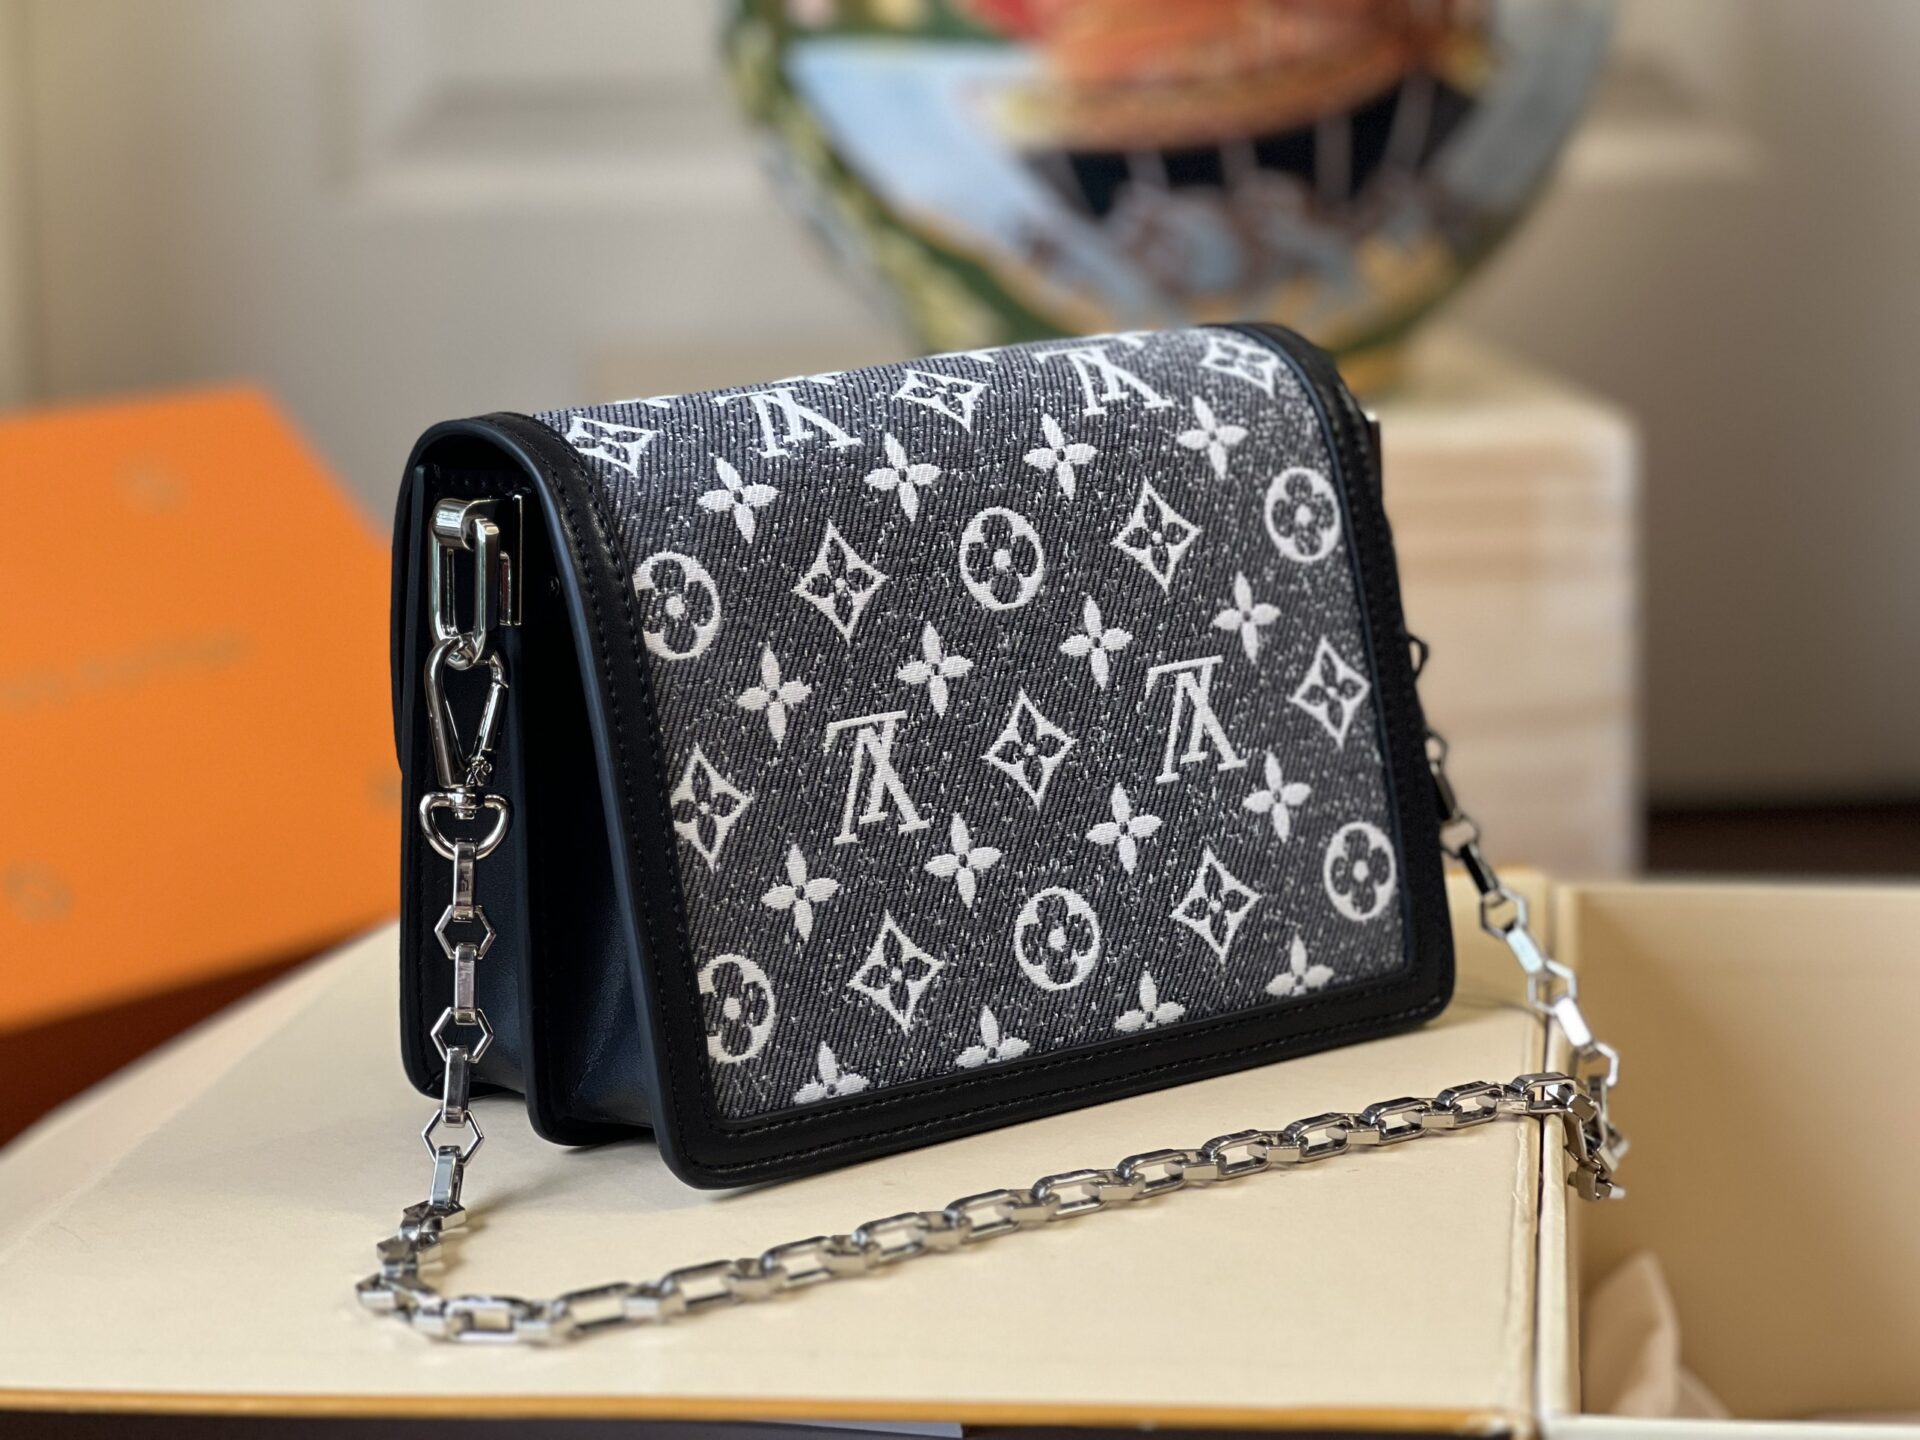 Túi Xách Louis Vuitton LV Passy Monogram Bag Like Authentic